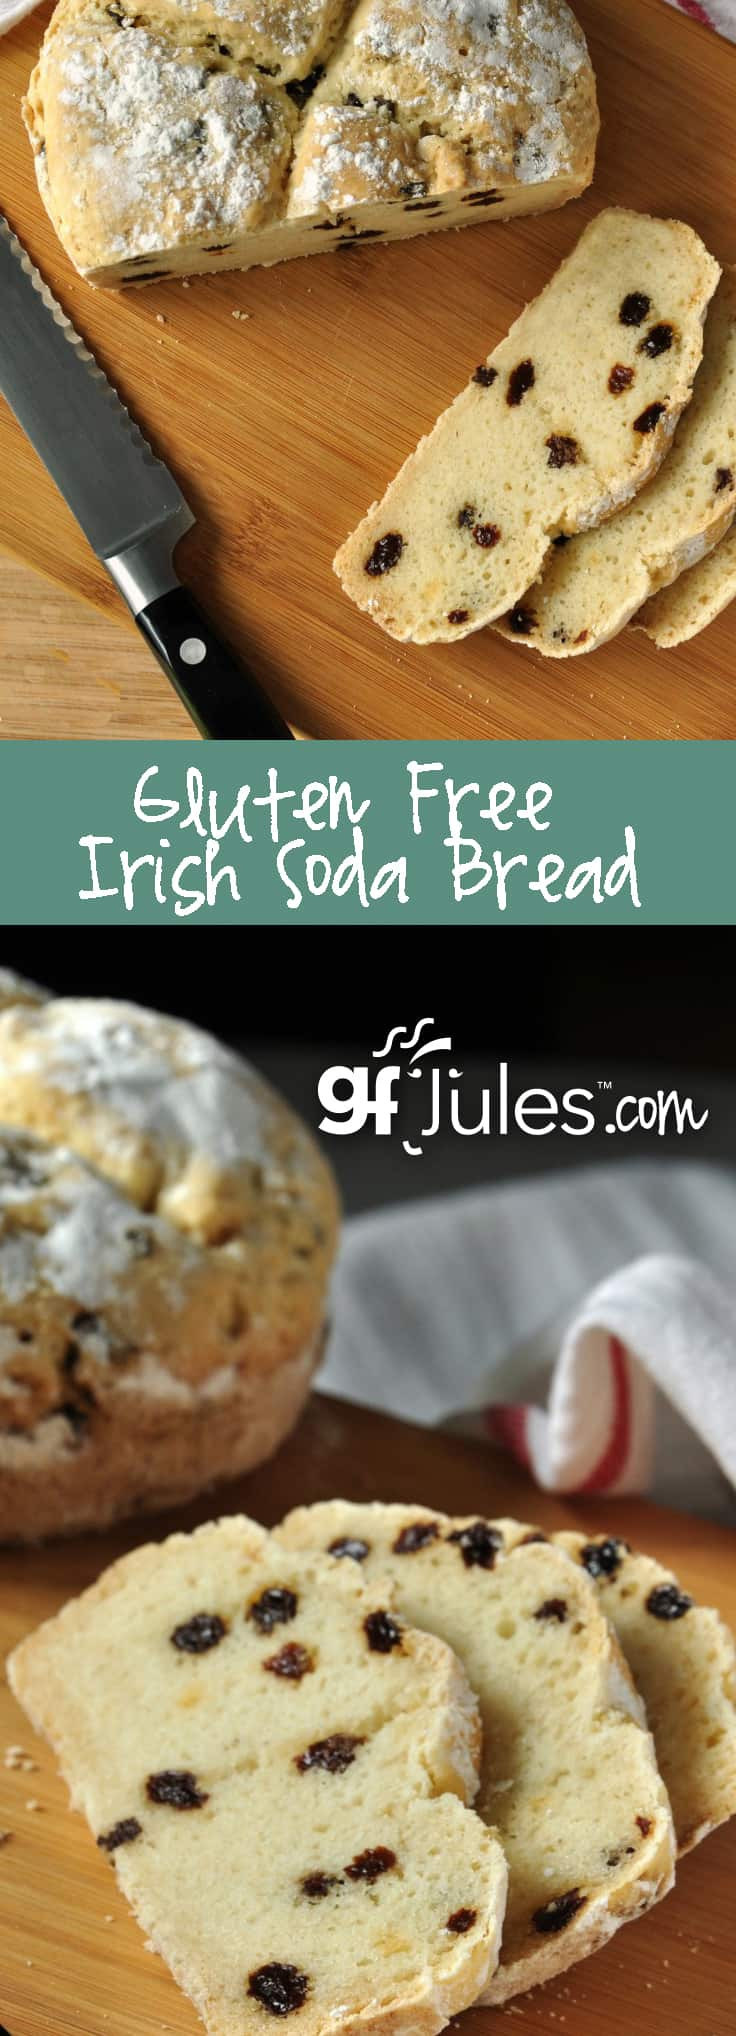 Gluten Free Irish Soda Bread Recipe
 Gluten Free Irish Soda Bread soft & moist with 1 rated